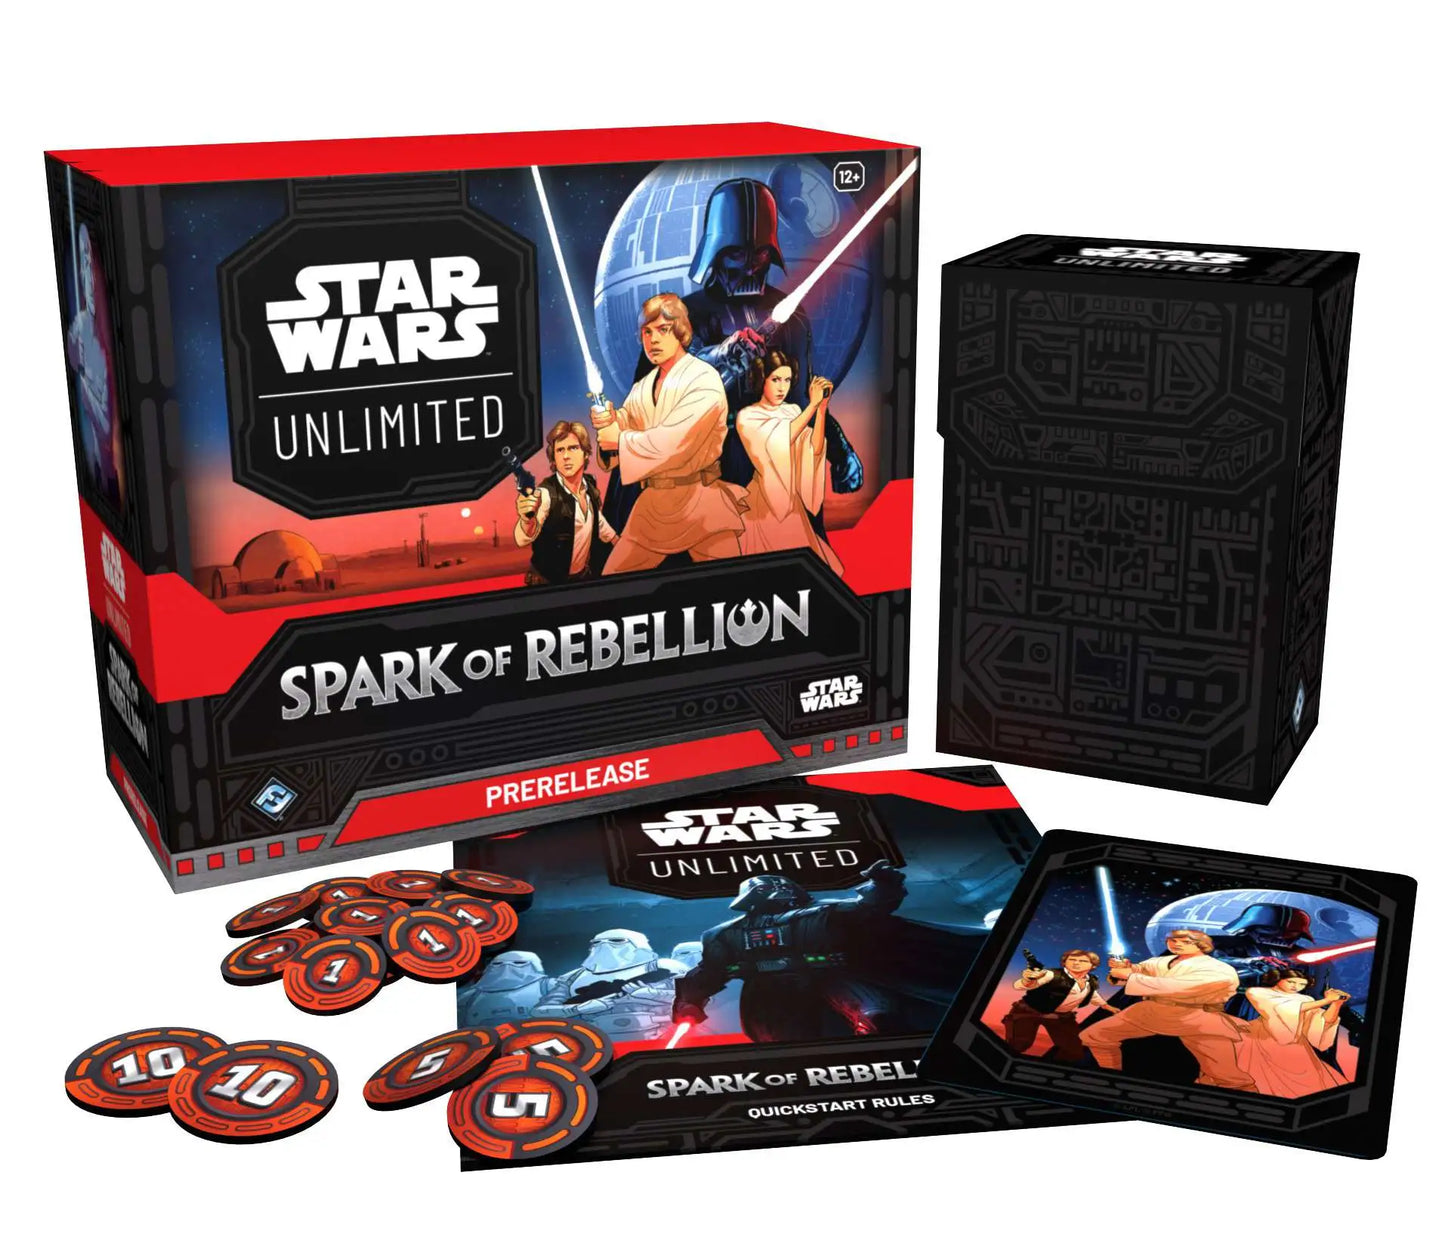 Star Wars Unlimited Spark of Rebellion (SoR) PreRelease Kit Star Wars Unlimited Fantasy Flight Games   